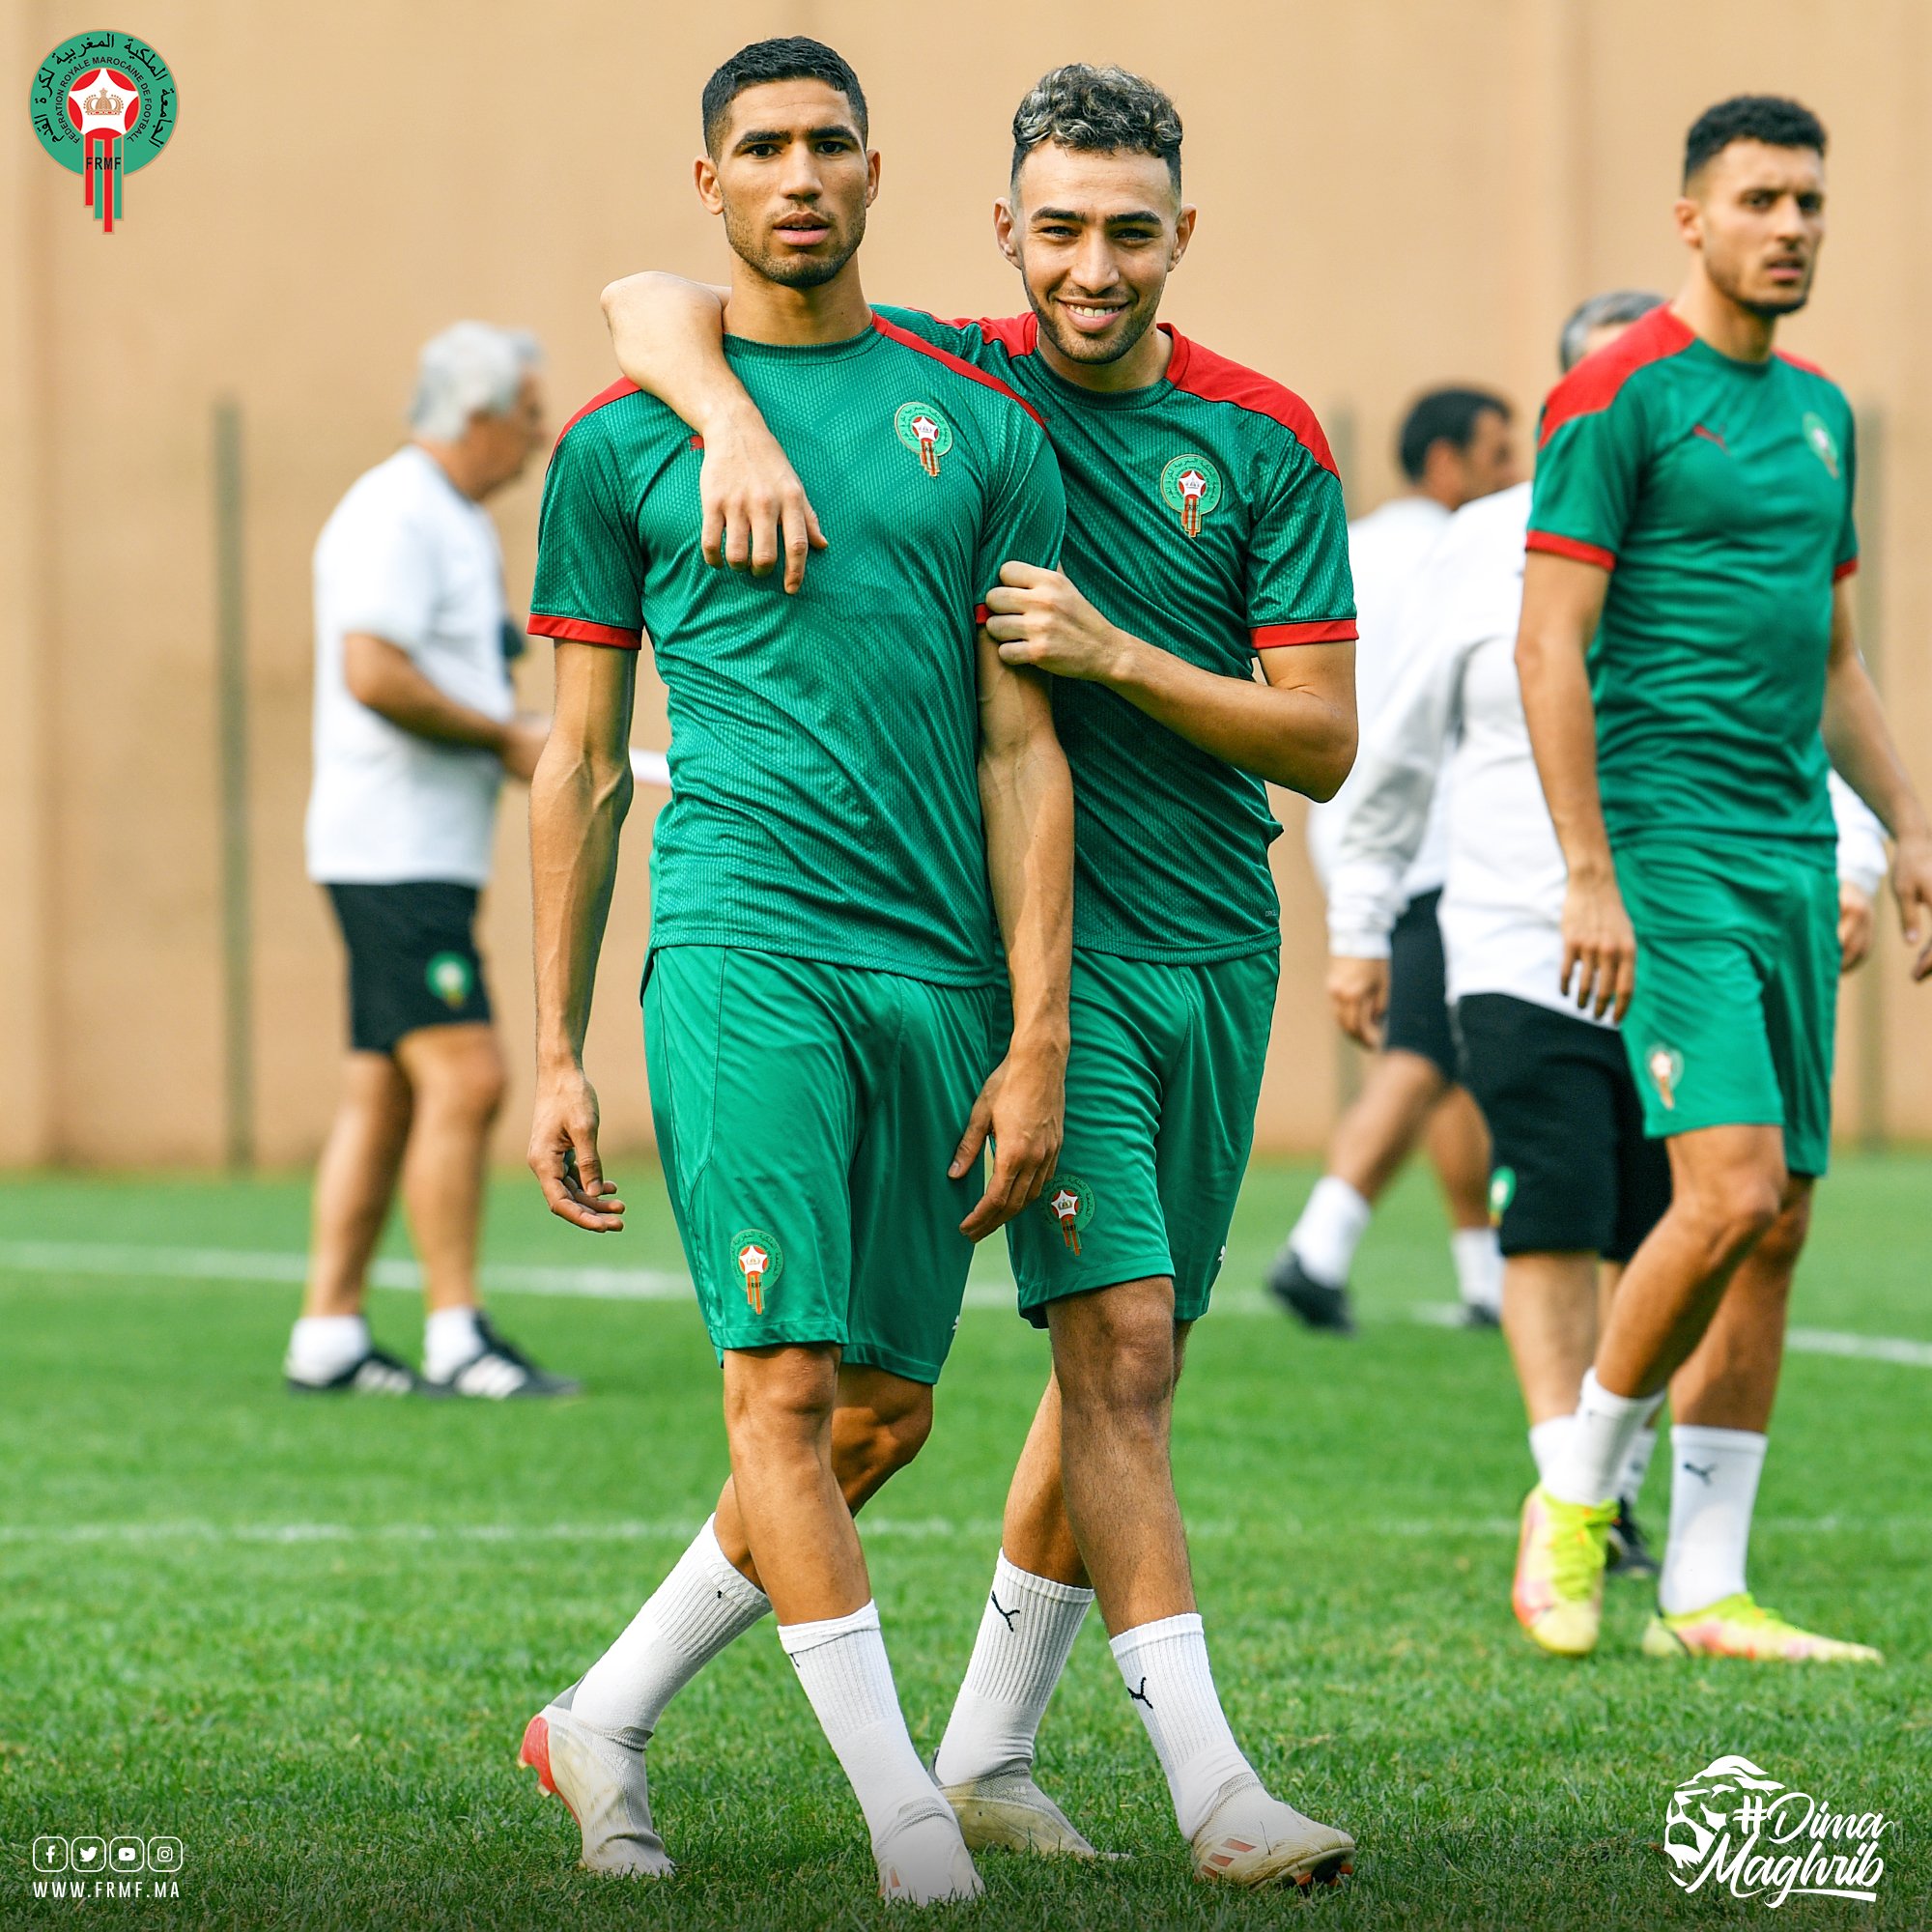 Équipe du Maroc on Twitter: "https://t.co/CQ08TItnmq" / Twitter